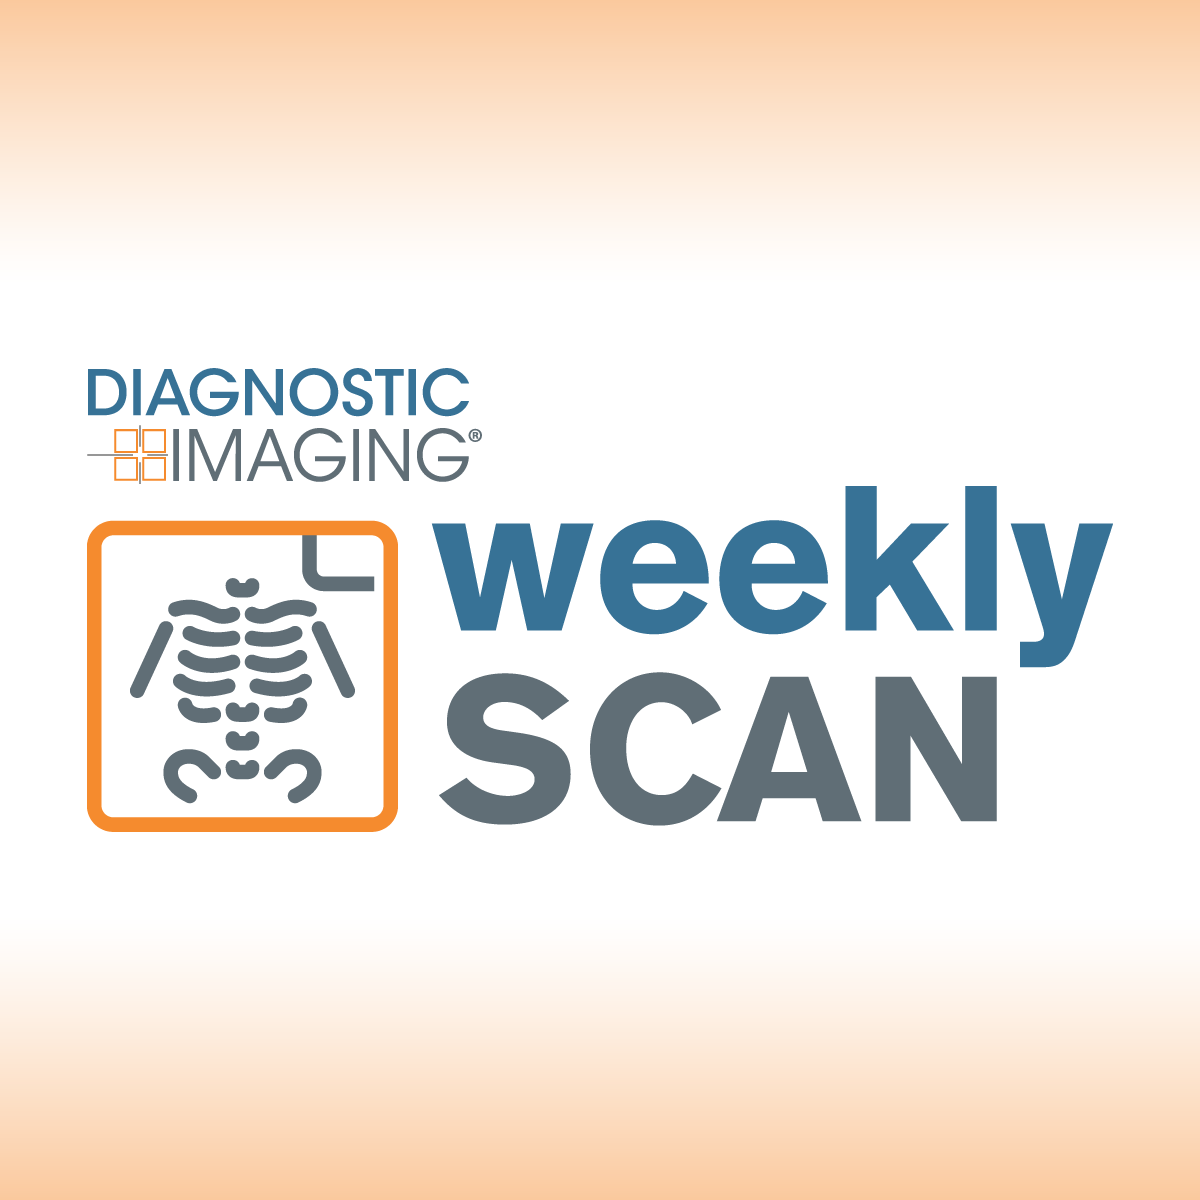 Diagnostic Imaging's Weekly Scan: October 29-November 4